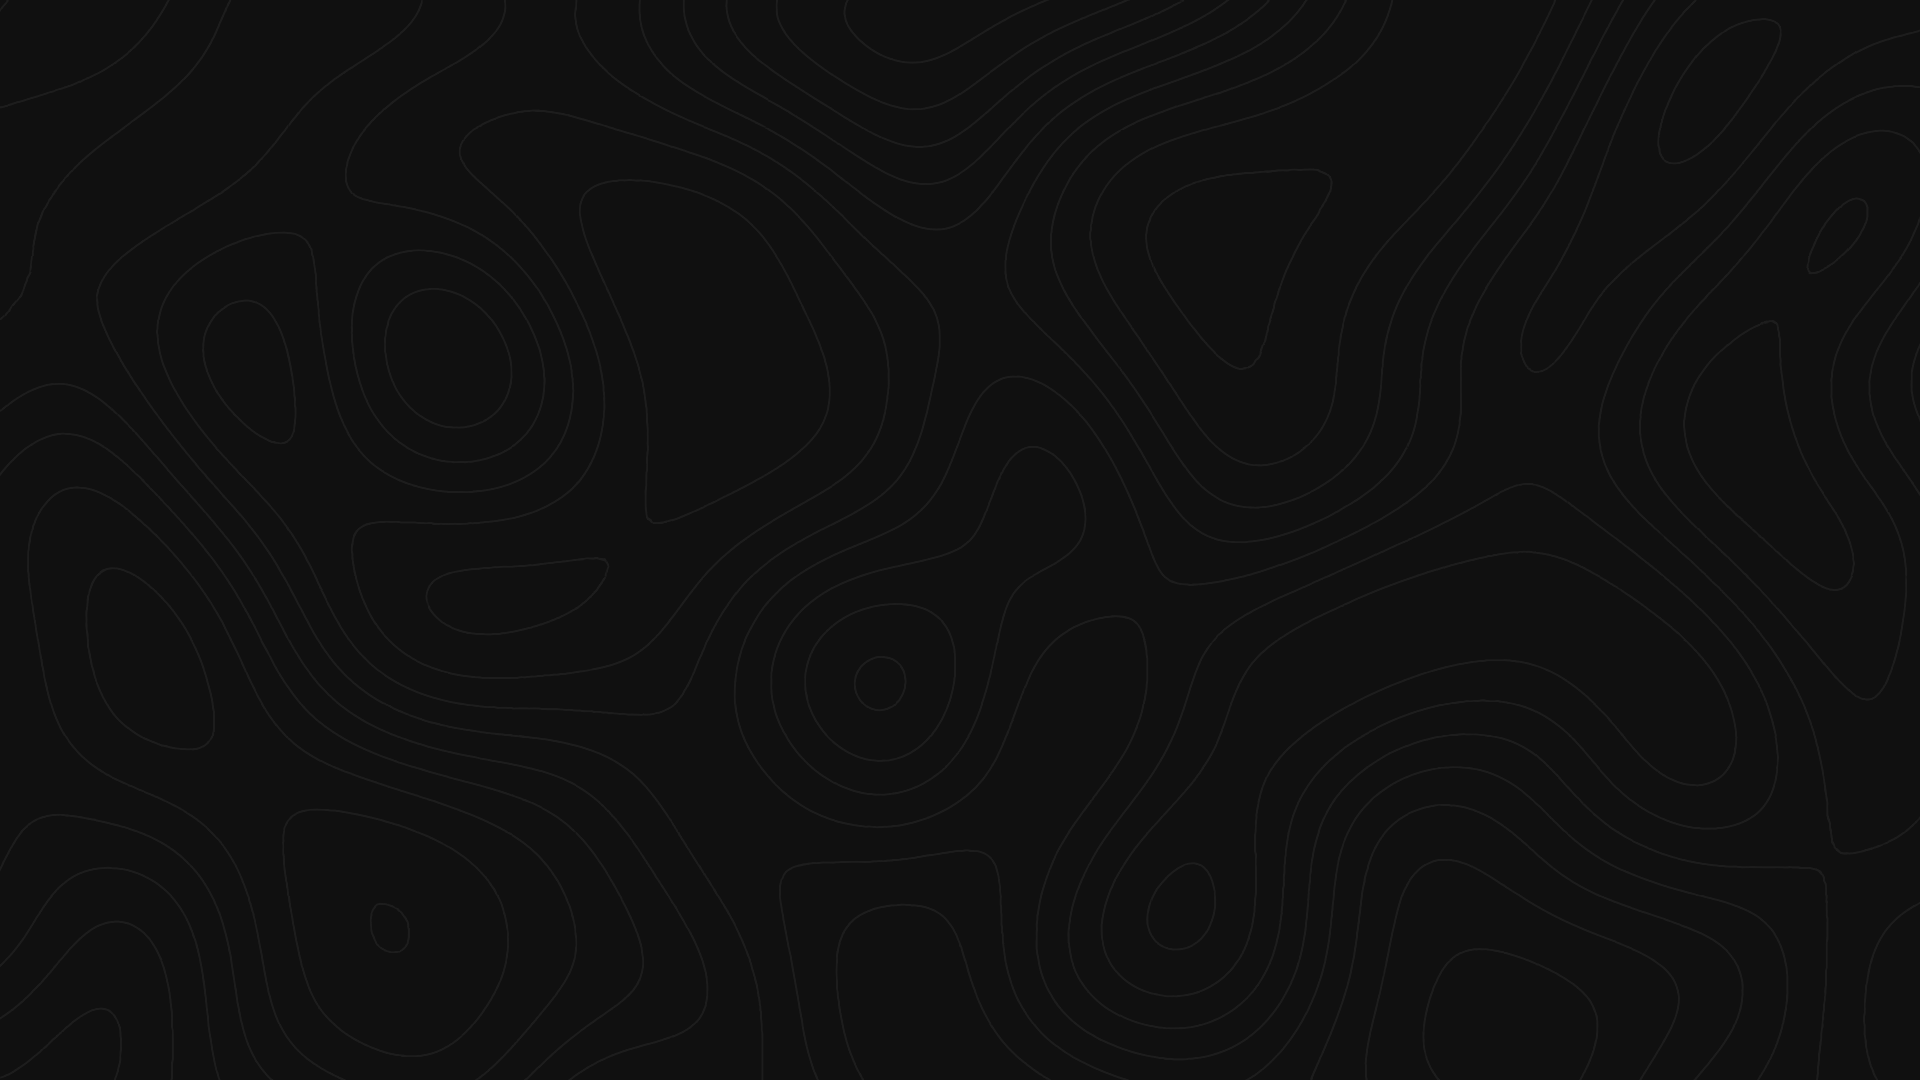 General 1920x1080 waves minimalism simple background dark background topography black